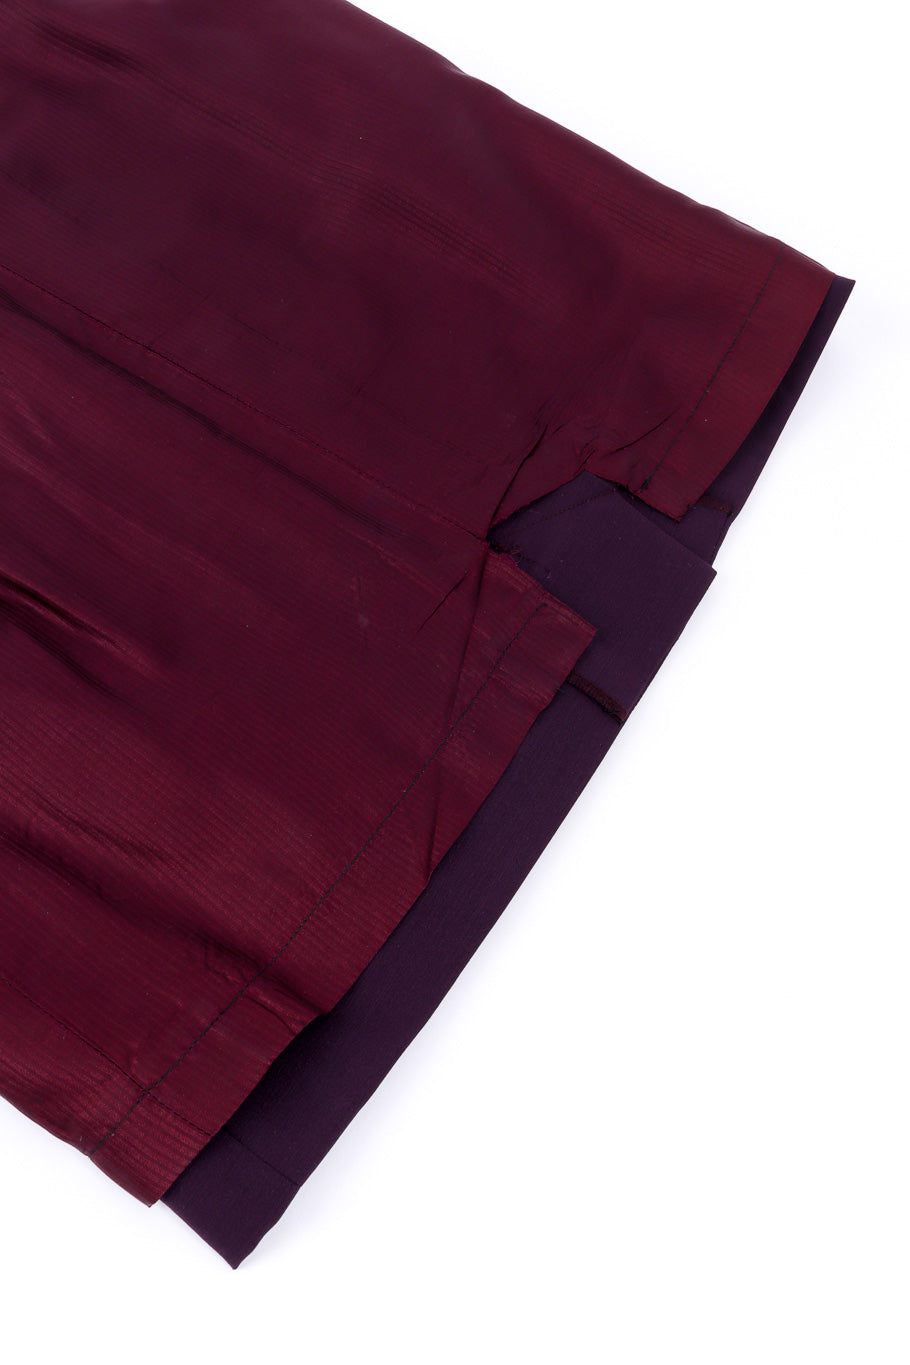 Vintage Hermés Asymmetrical Blazer and Skirt Set skirt view of lining @recessla